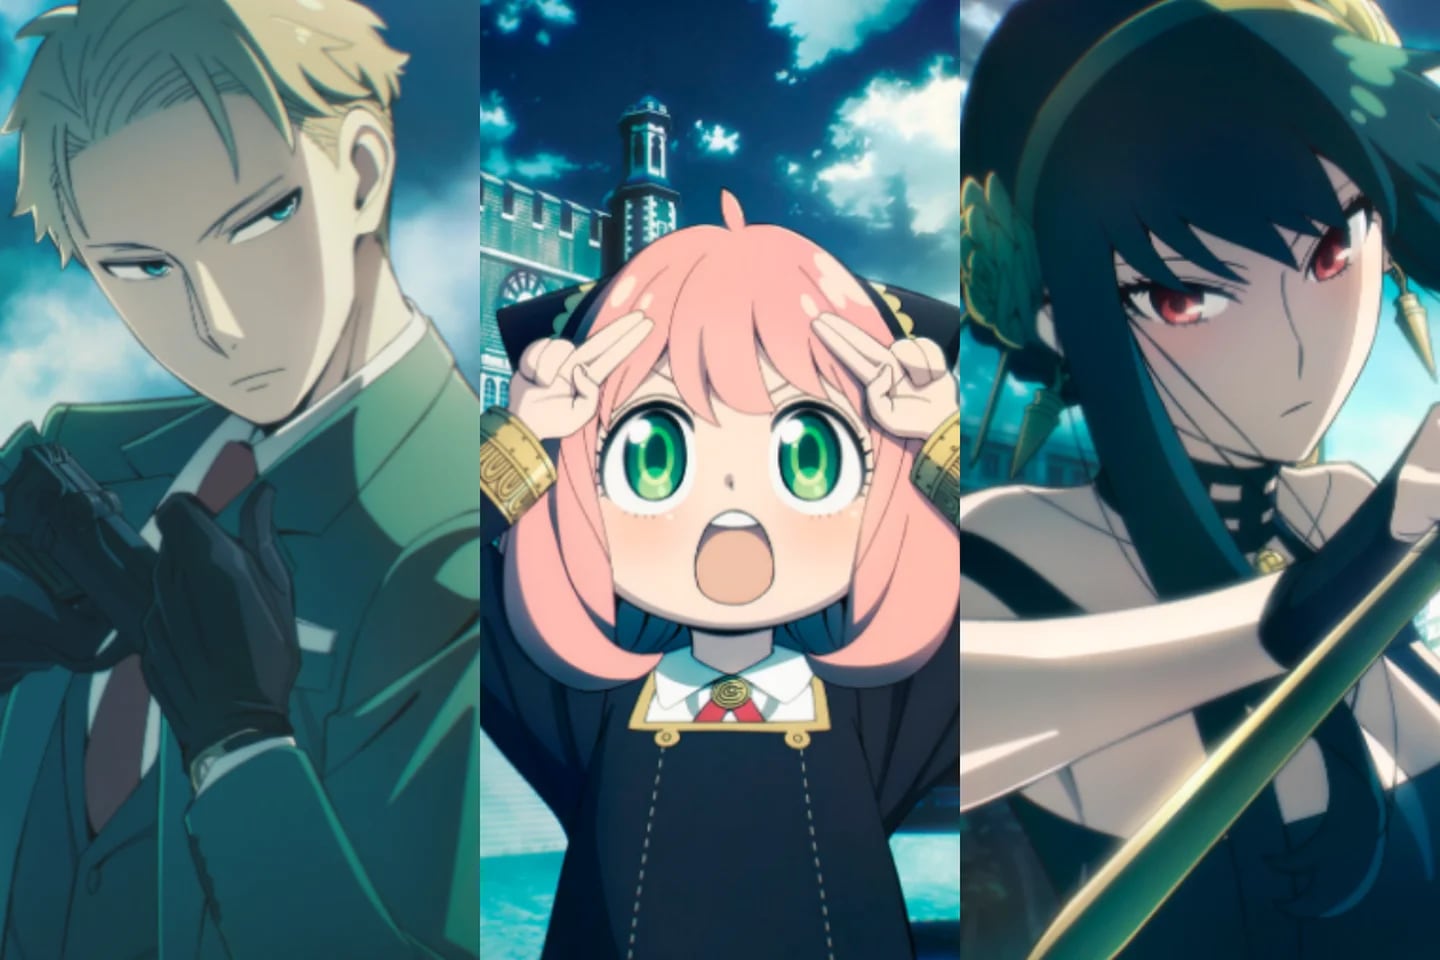 Anime: Spy x Family tendrá 25 episodios y segunda temporada